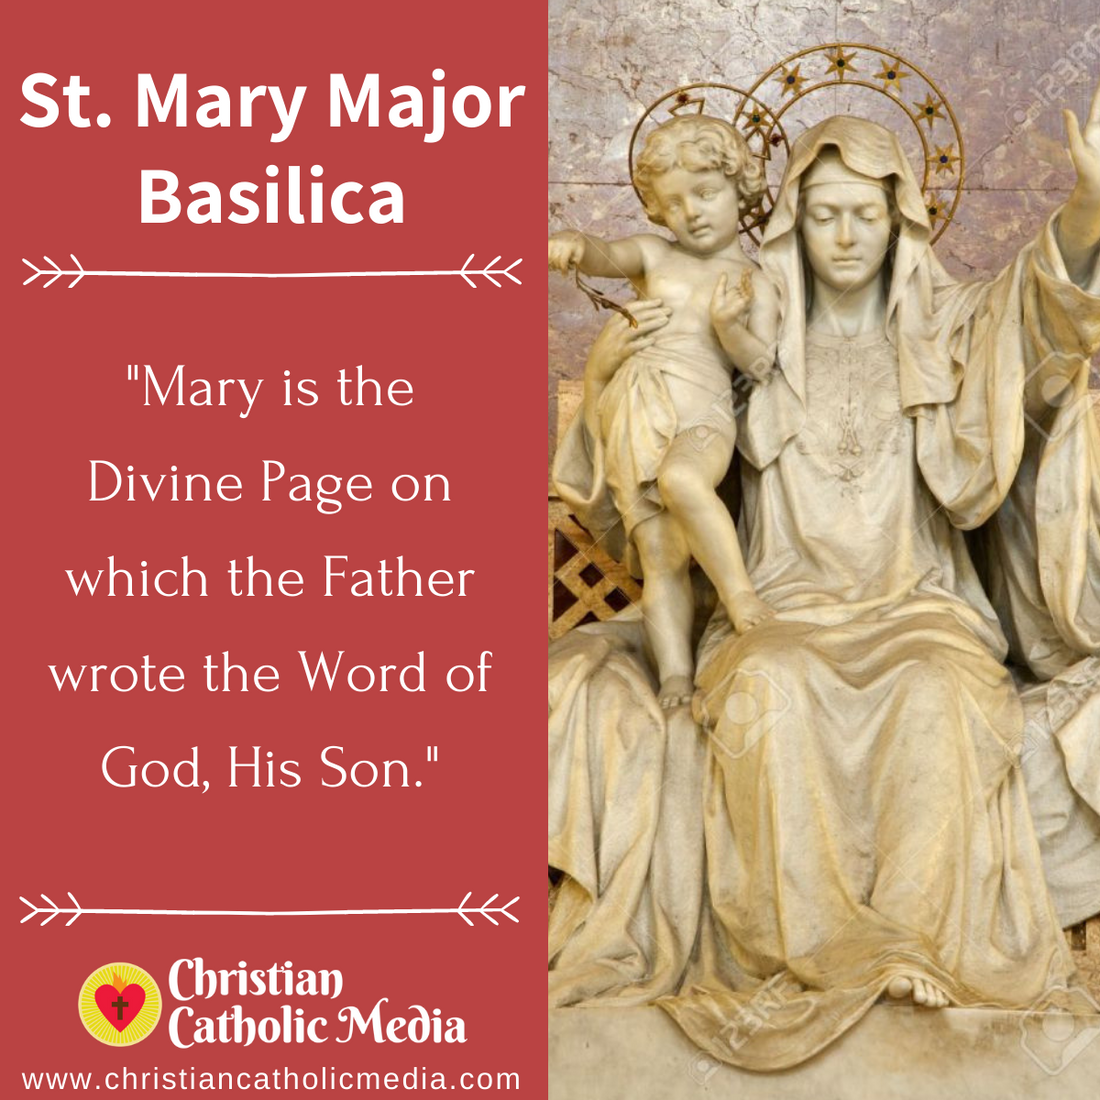 St. Mary Major Basilica - Wednesday August 5, 2020